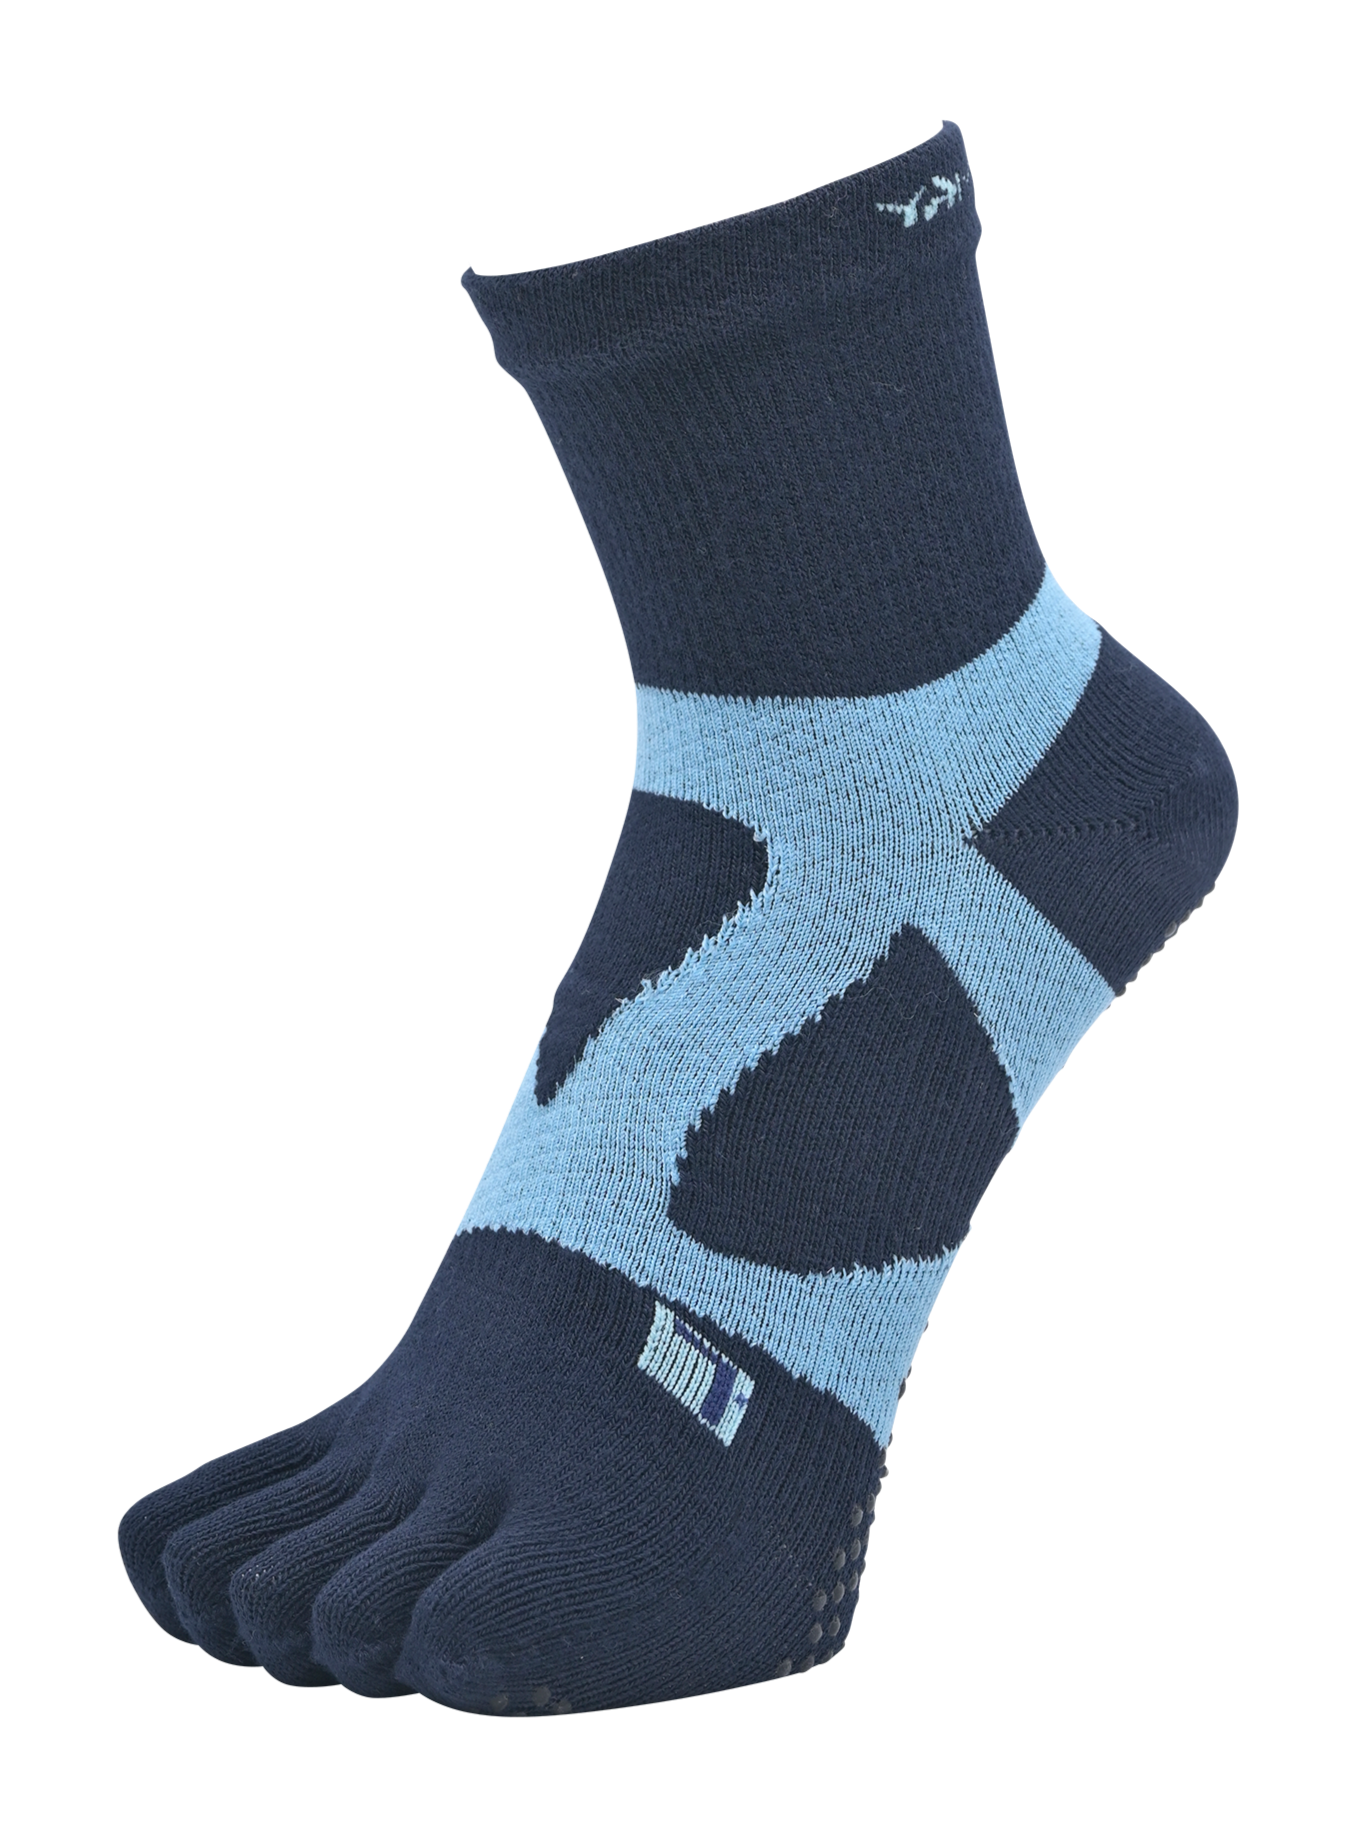 YAMAtune - Spider-Arch Compression - Mid-Length 5-Toe Socks - Non-Slip Dots - Navy/L.Blue